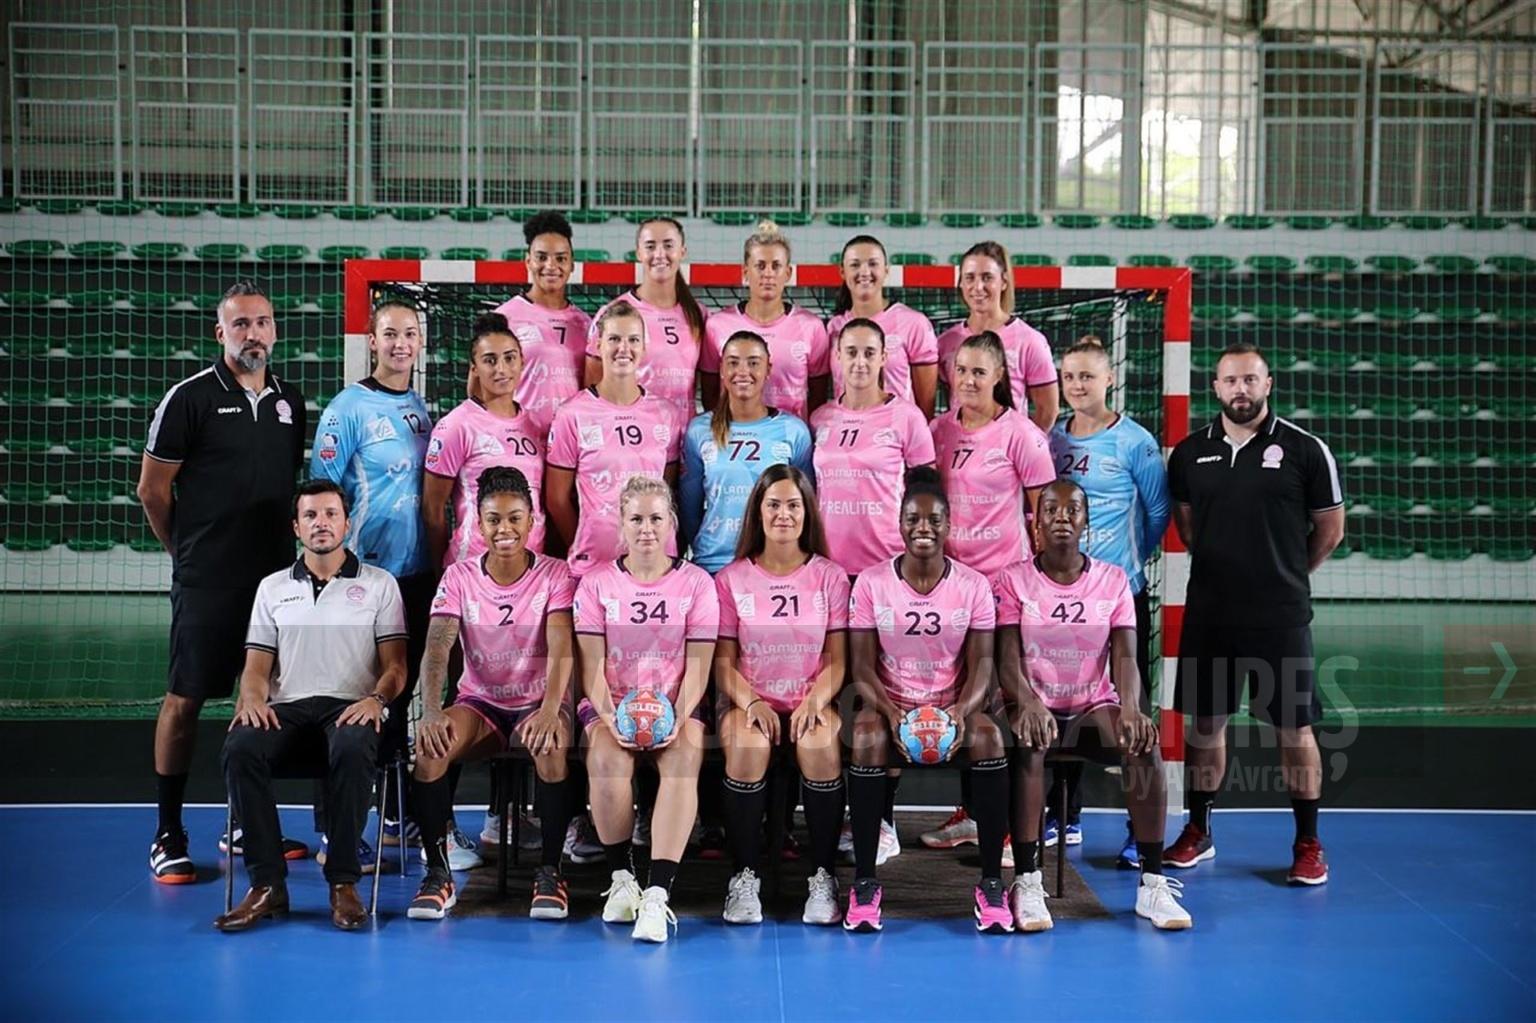 Handbal feminin: Minaur va întâlni echipa franceză Nantes în semifinalele Ligii Europene